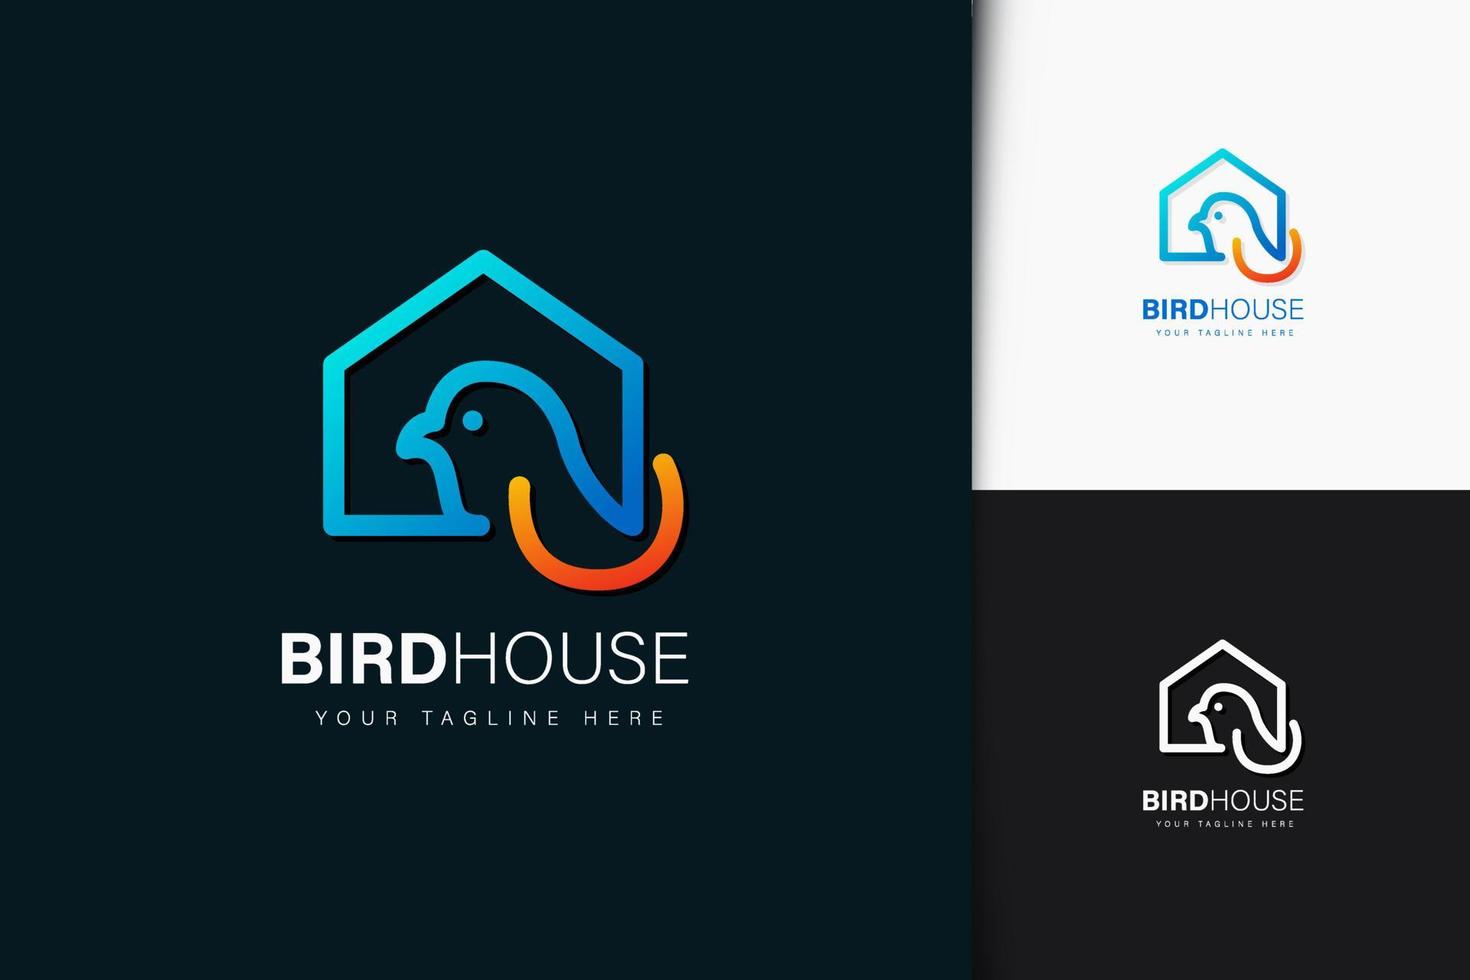 Bird house logo design with gradient vector